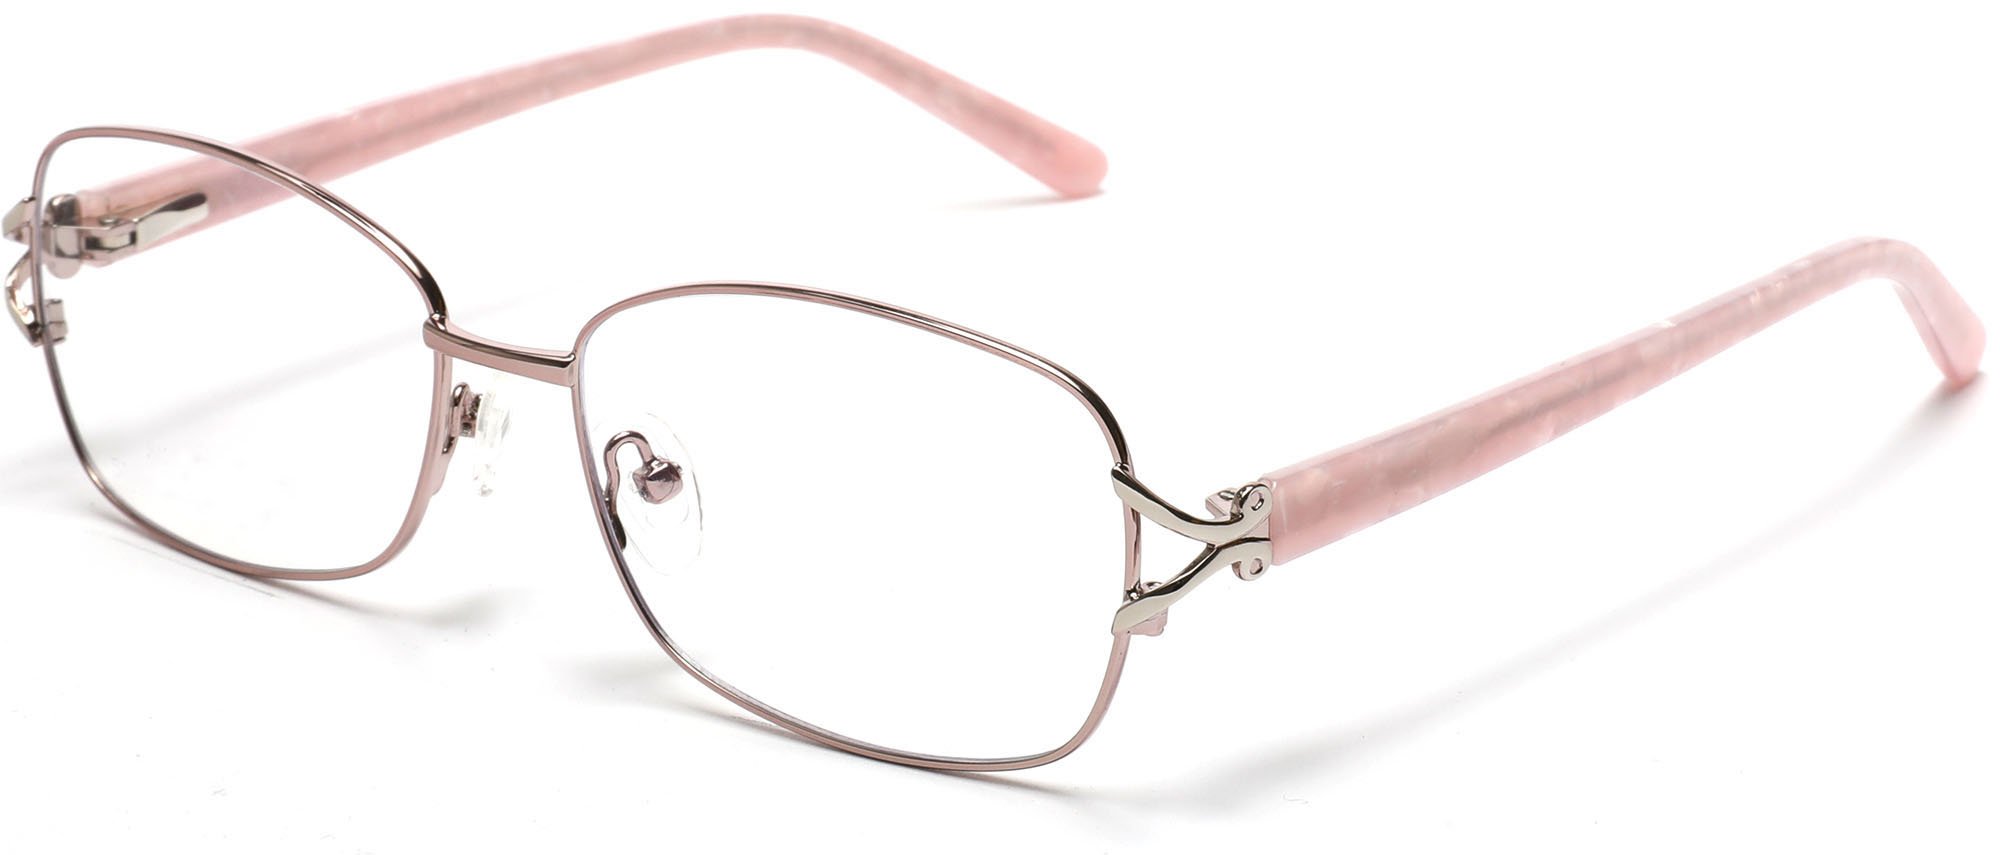 Tango Optics Metal Optical Eyeglasses Frame Luxe Stainless Steel Virginia Apgar Square Pink Silver Oval For Prescription Lens-Samba Shades